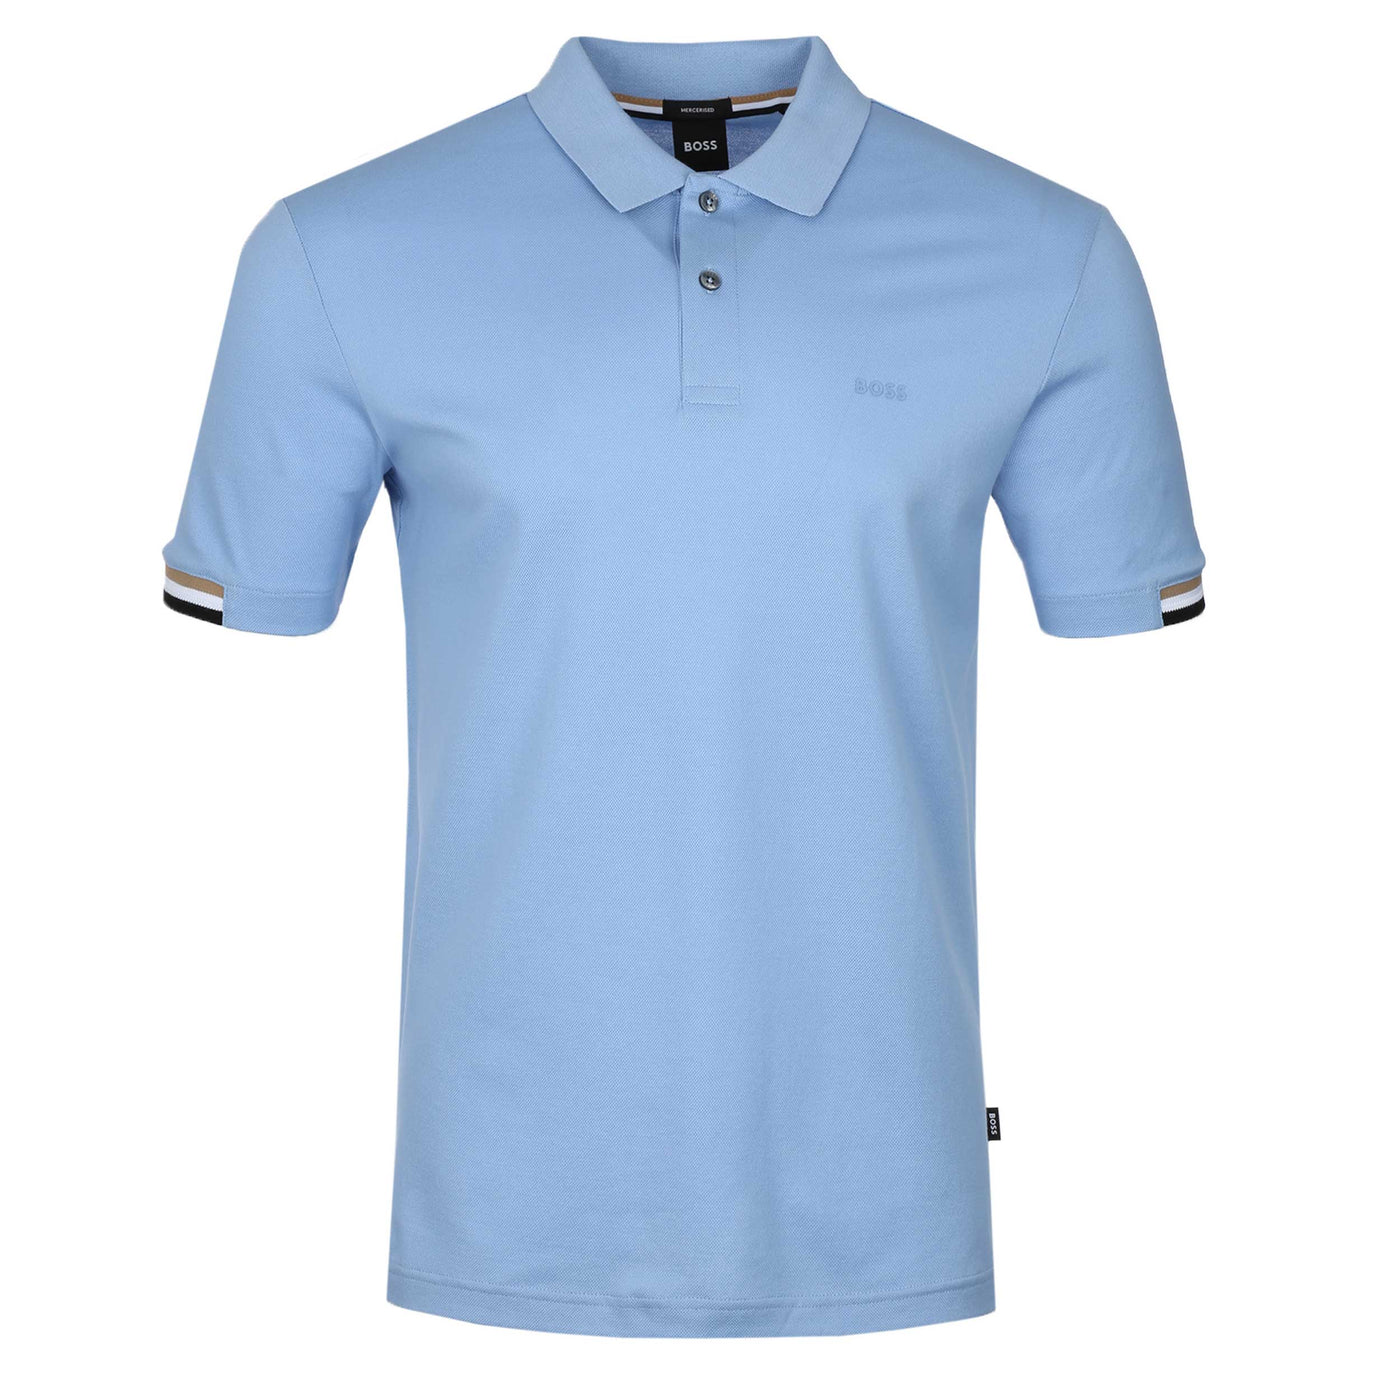 BOSS Parlay 147 Polo Shirt in Sky Blue